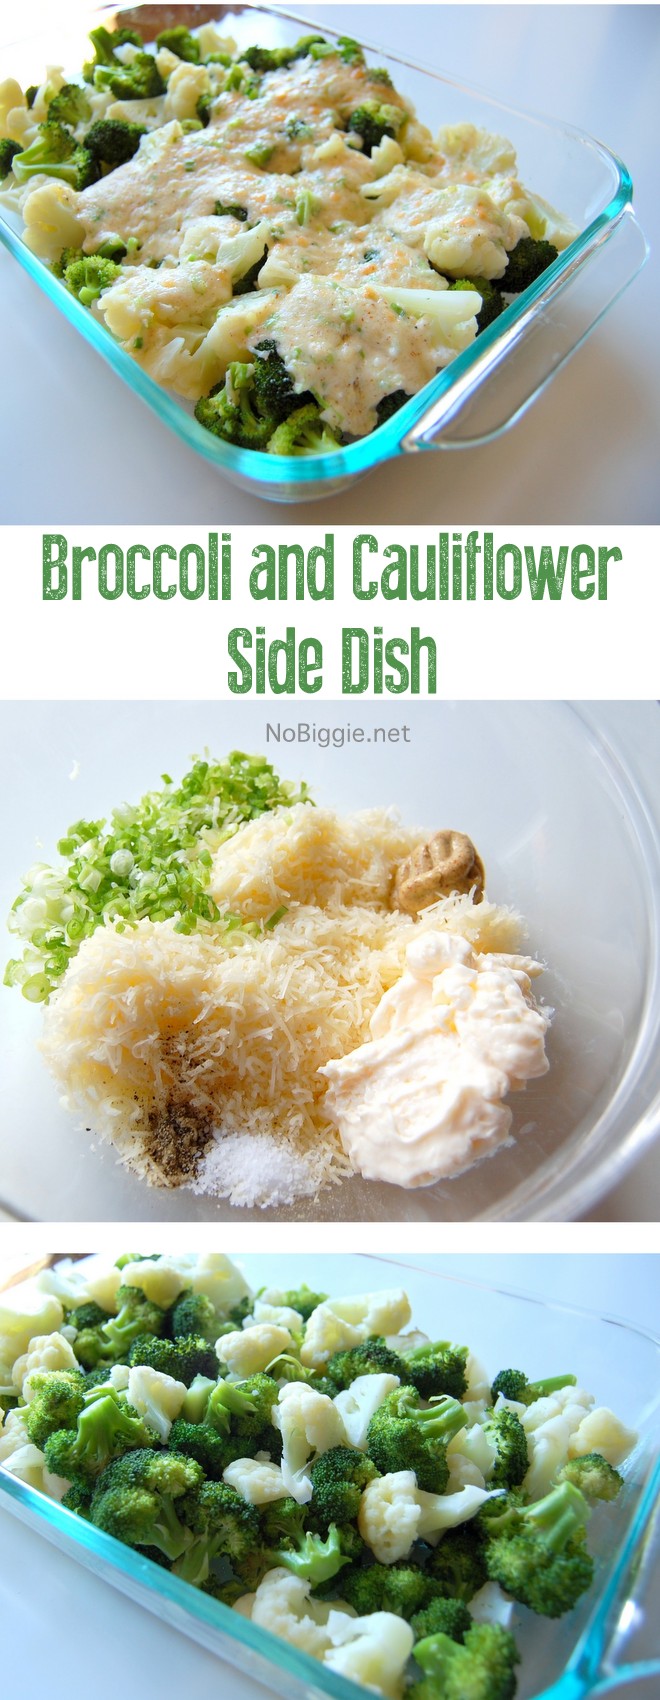 http://www.nobiggie.net/wp-content/uploads/2010/09/Broccoli-and-Cauliflower-Swiss-Cheese-side-dish.jpg